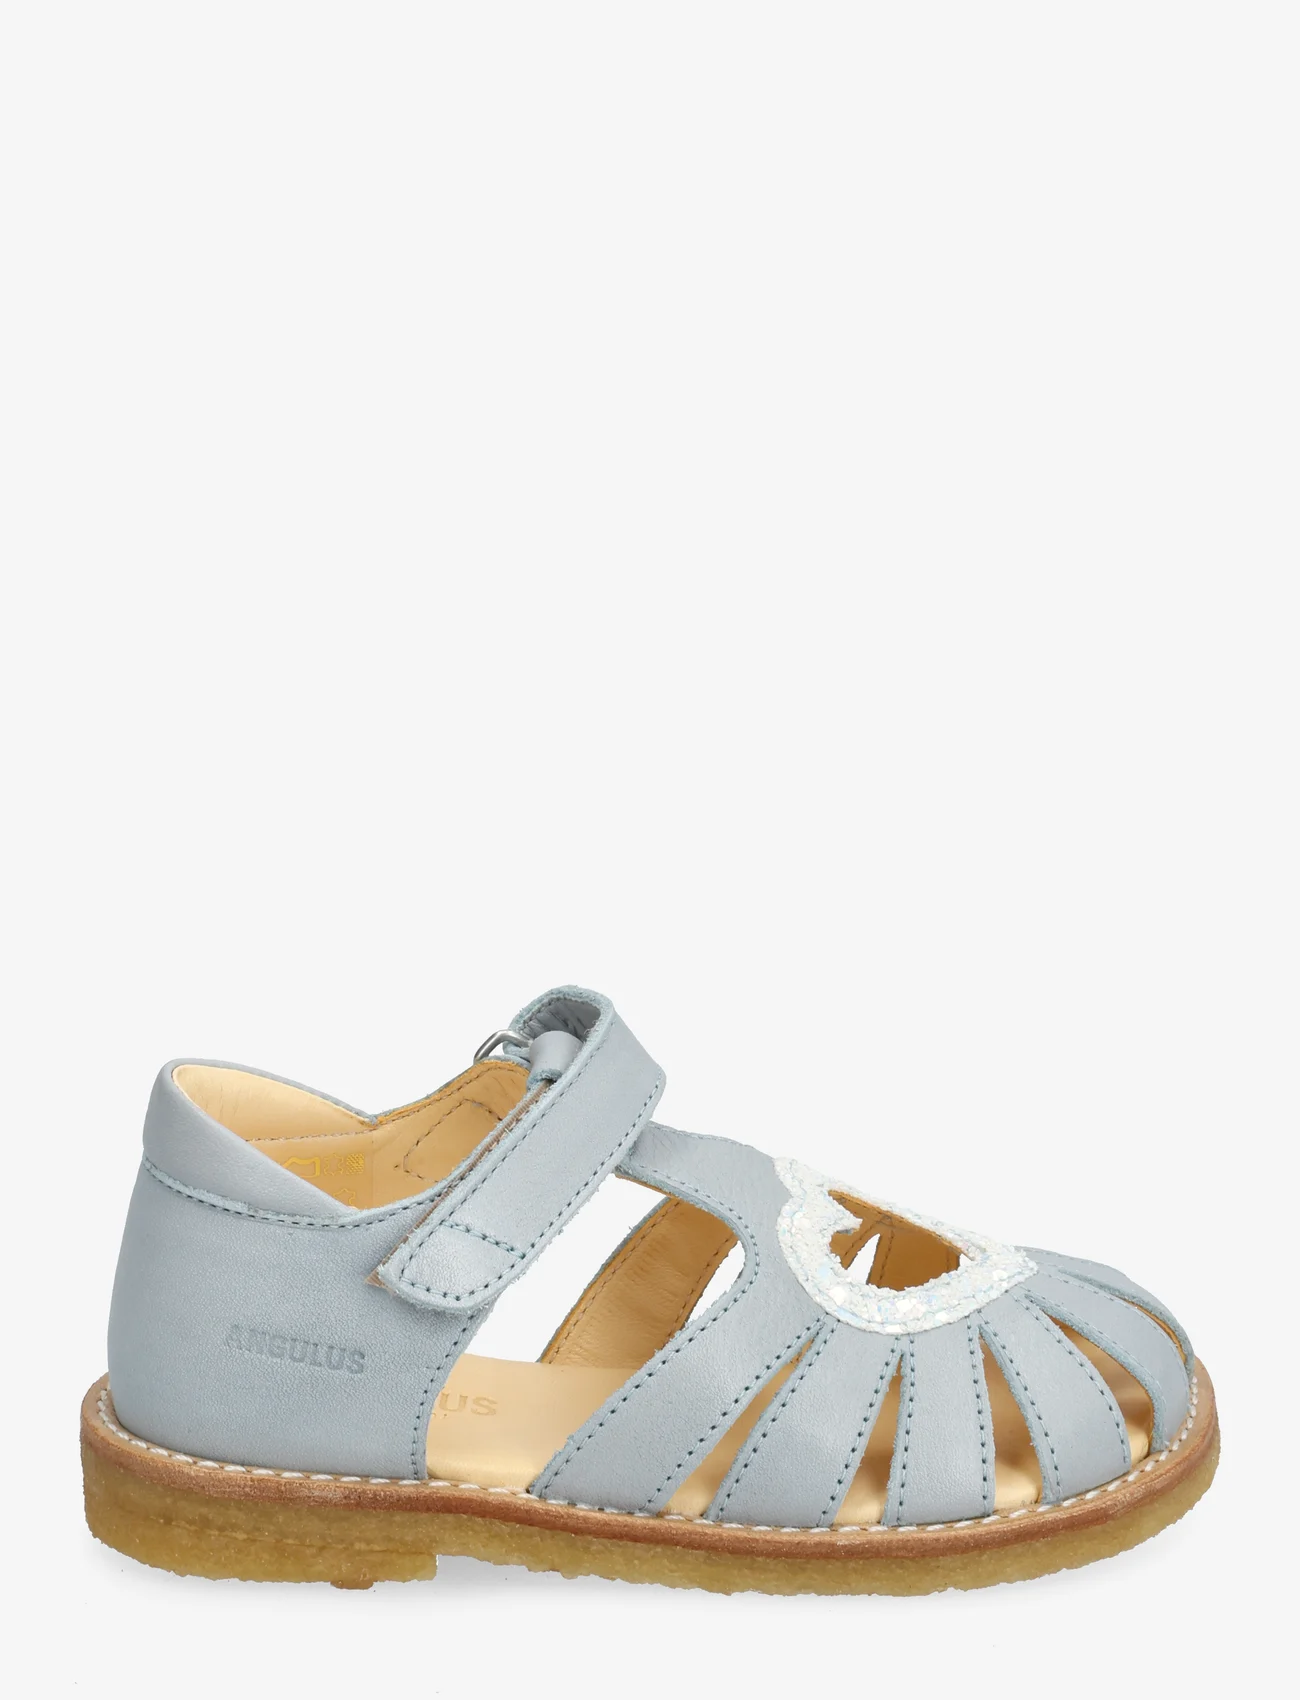 ANGULUS - Sandals - flat - closed toe - - summer savings - 2712/2751 ice blue/ice glitter - 1